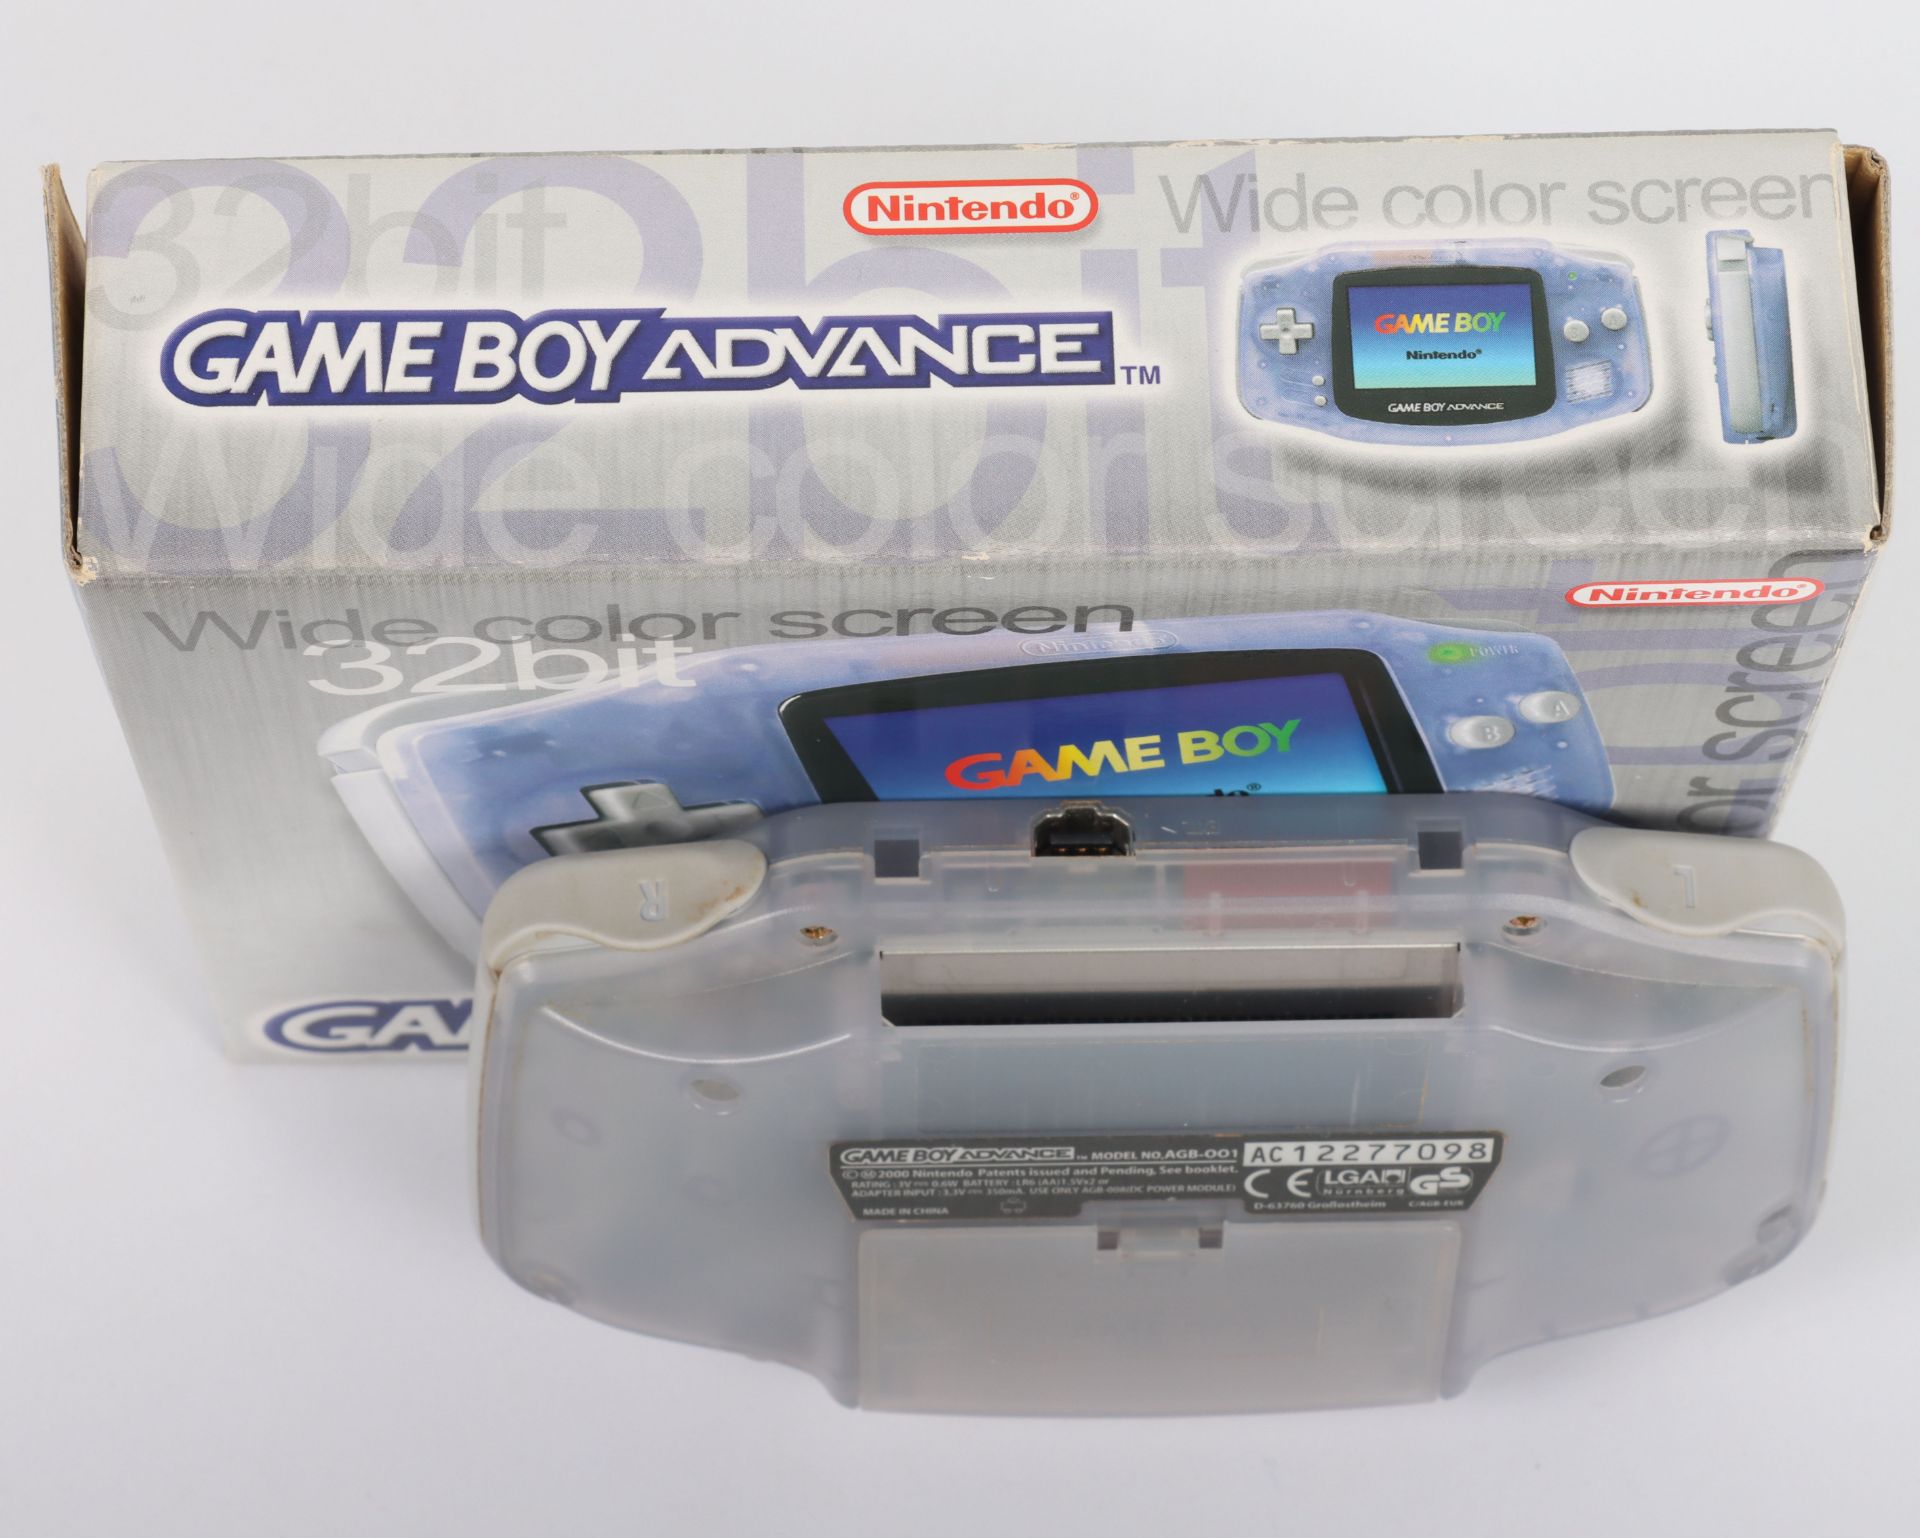 Nintendo Game Boy Advance - Image 3 of 3